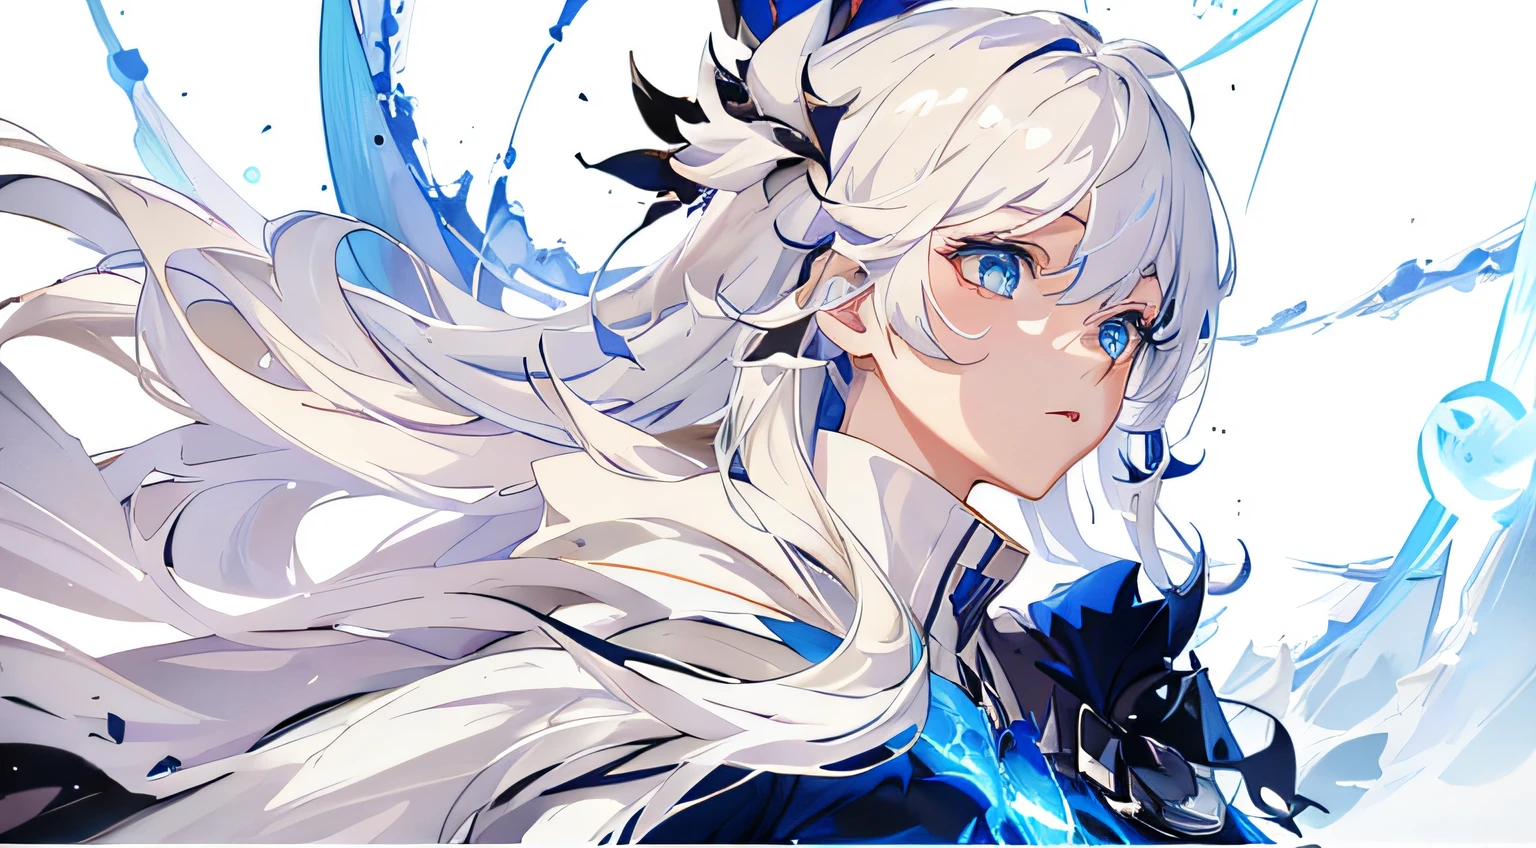 anime girl with white hair and blue eyes holding a sword, trending on  artstation pixiv, Anime art wallpaper 8 K, Anime art wallpaper 4k, Anime  art wallpaper 4 K - SeaArt AI